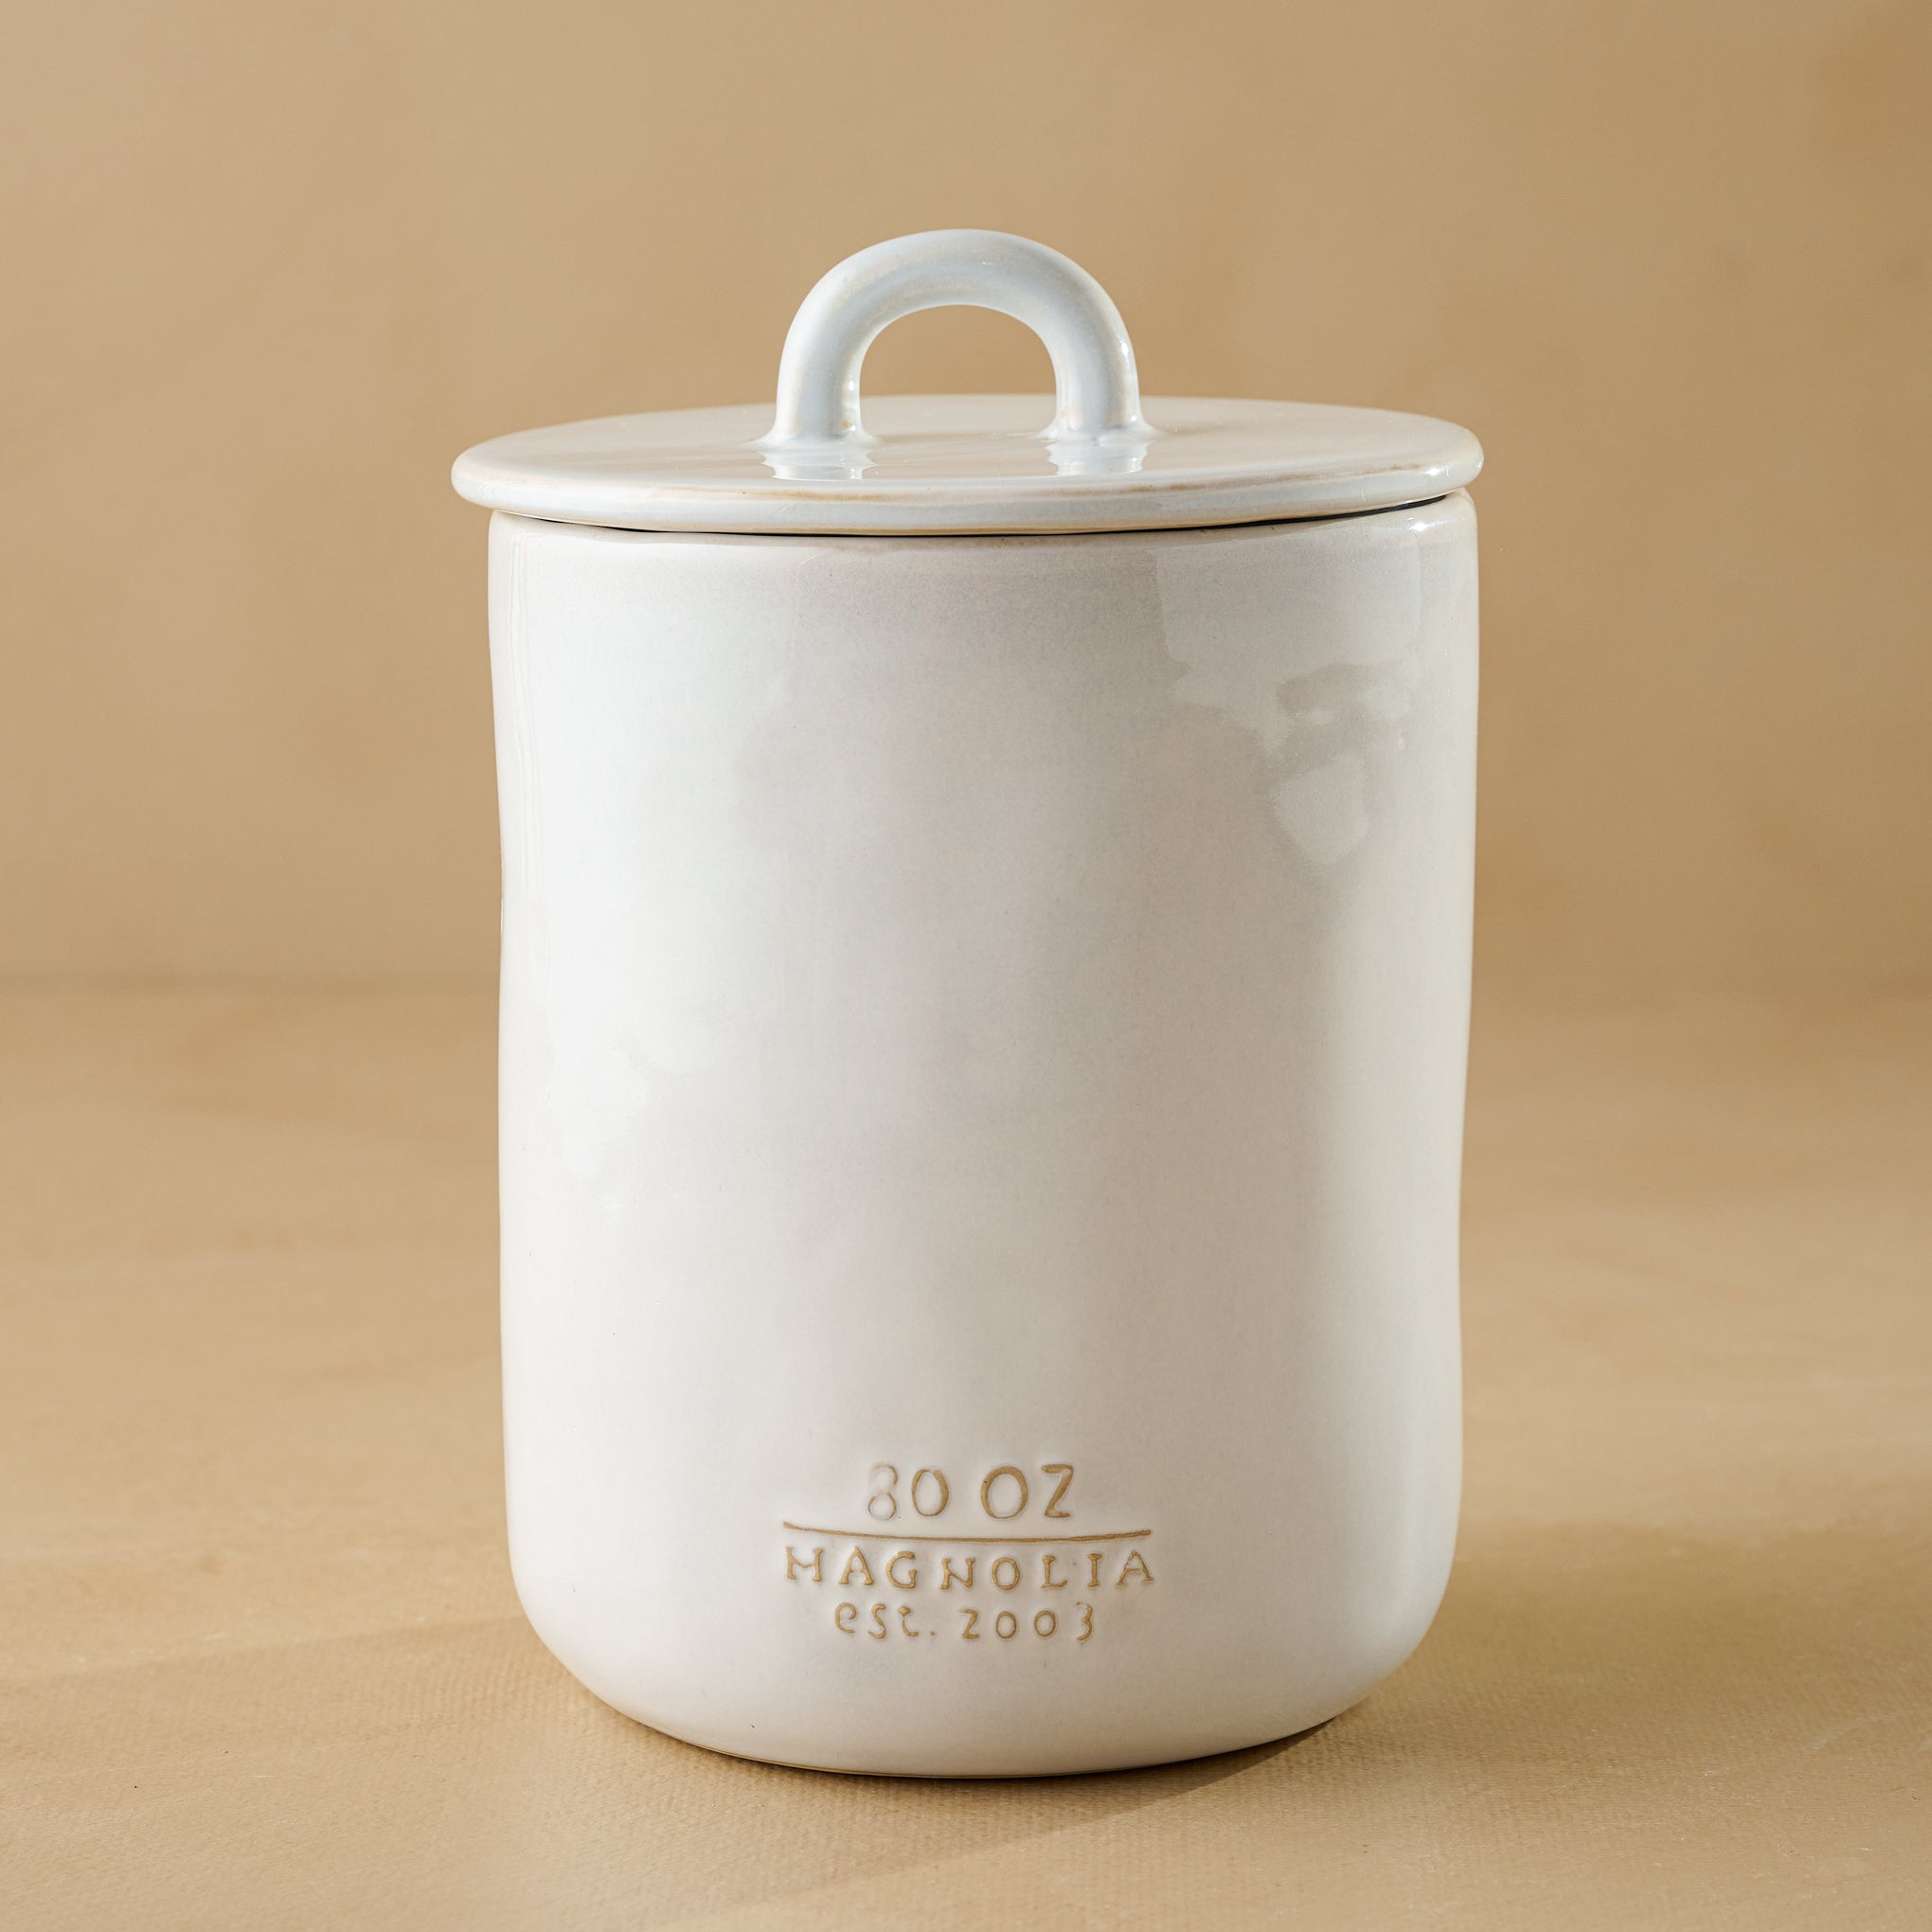 Ceramic Canister Set Mason Jar Kitchen Utensil Set Includes Cookie Jar,  Utensil Holder, Measuring Cups, Spoon Rest, Measuring - Buy Ceramic  Canister Set Mason Jar Kitchen Utensil Set Includes Cookie Jar, Utensil